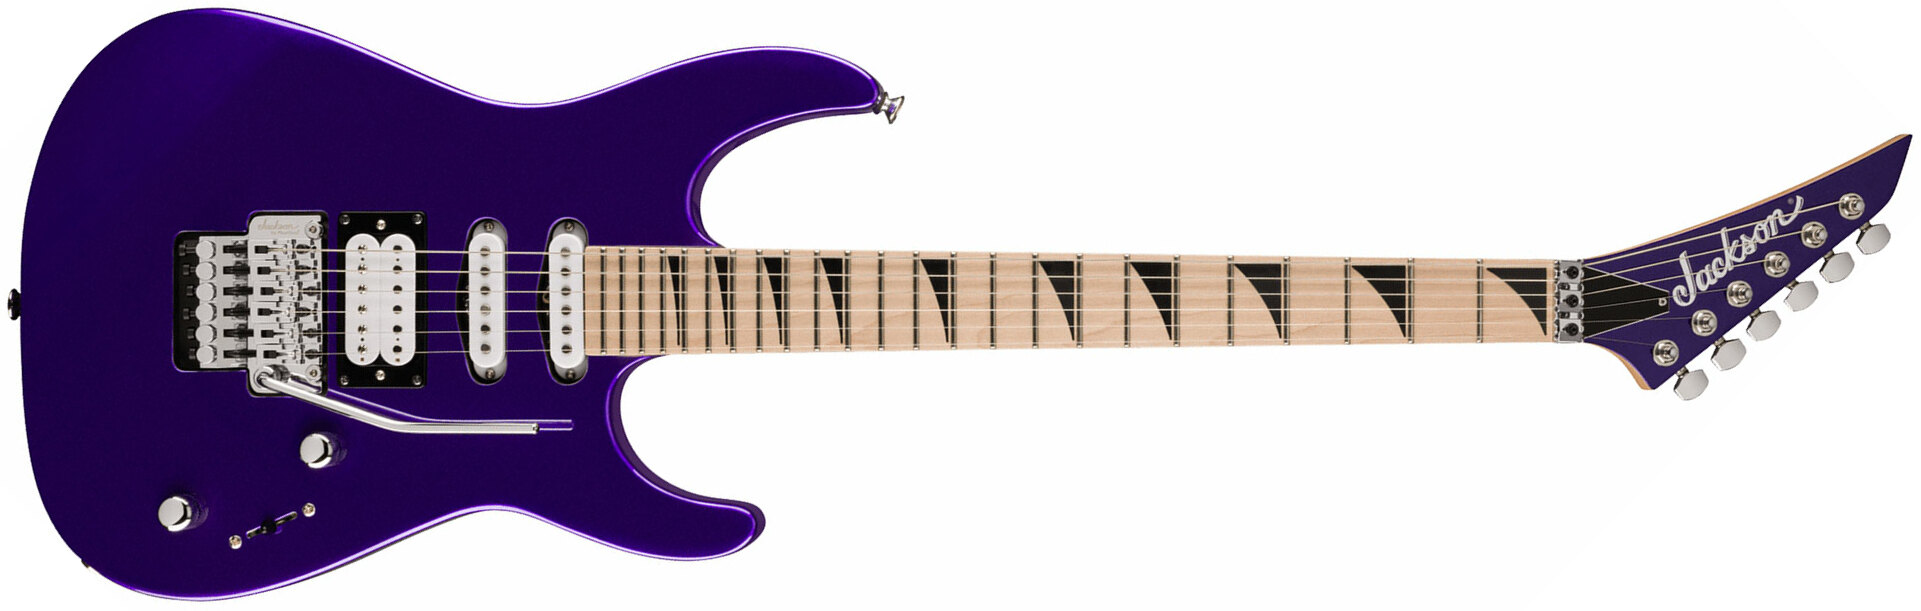 Jackson Dinky Dk3xr Hss Fr Mn - Deep Purple Metallic - Str shape electric guitar - Main picture